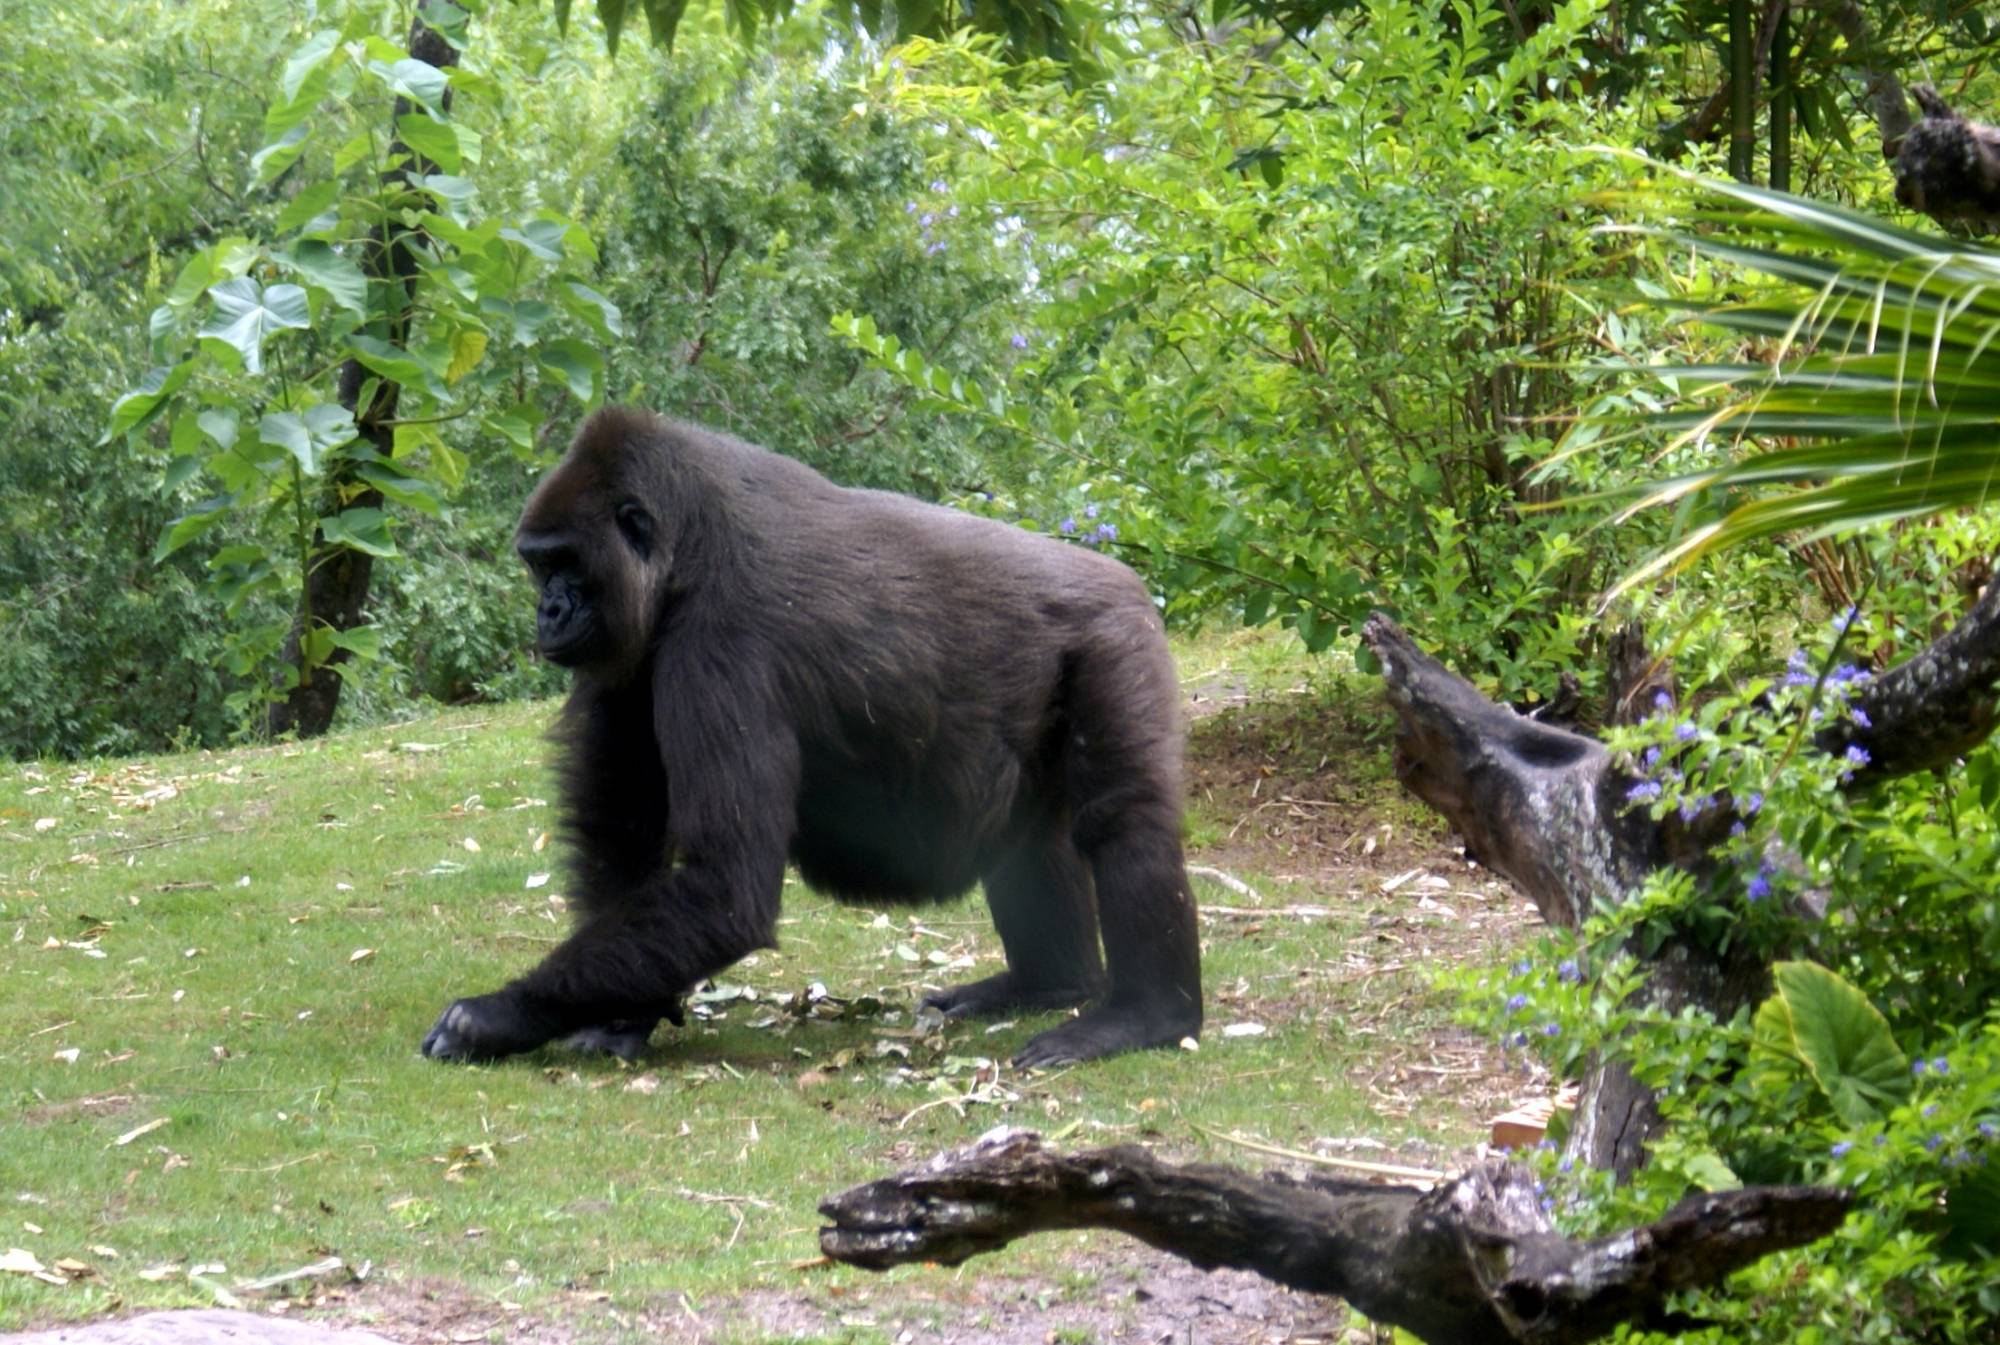 Female/Momma Gorilla